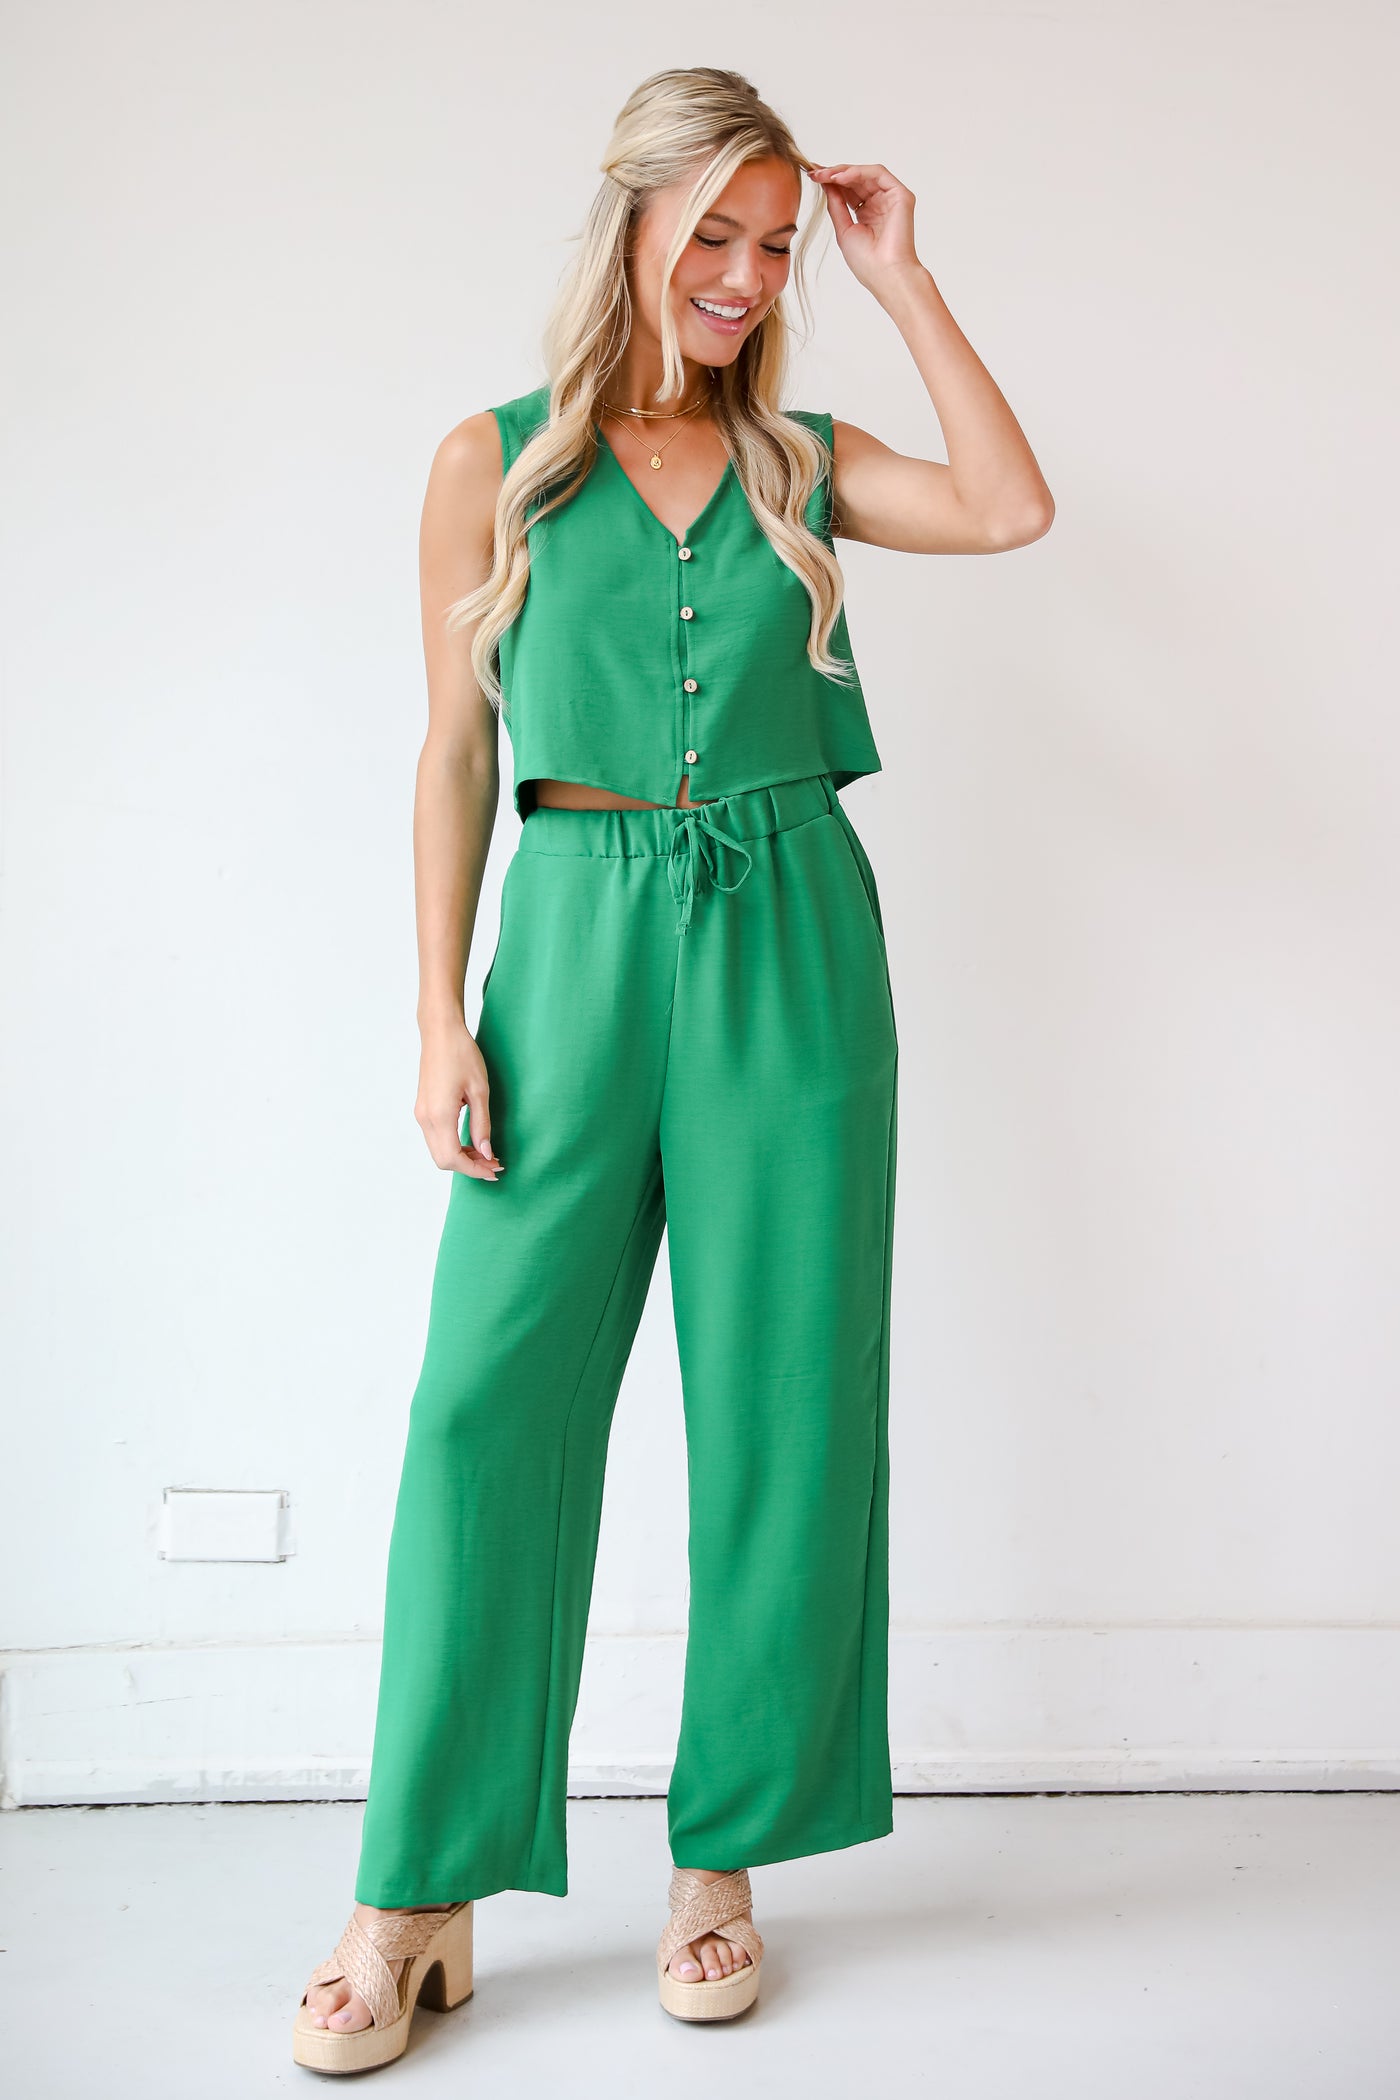 Green Pants for women